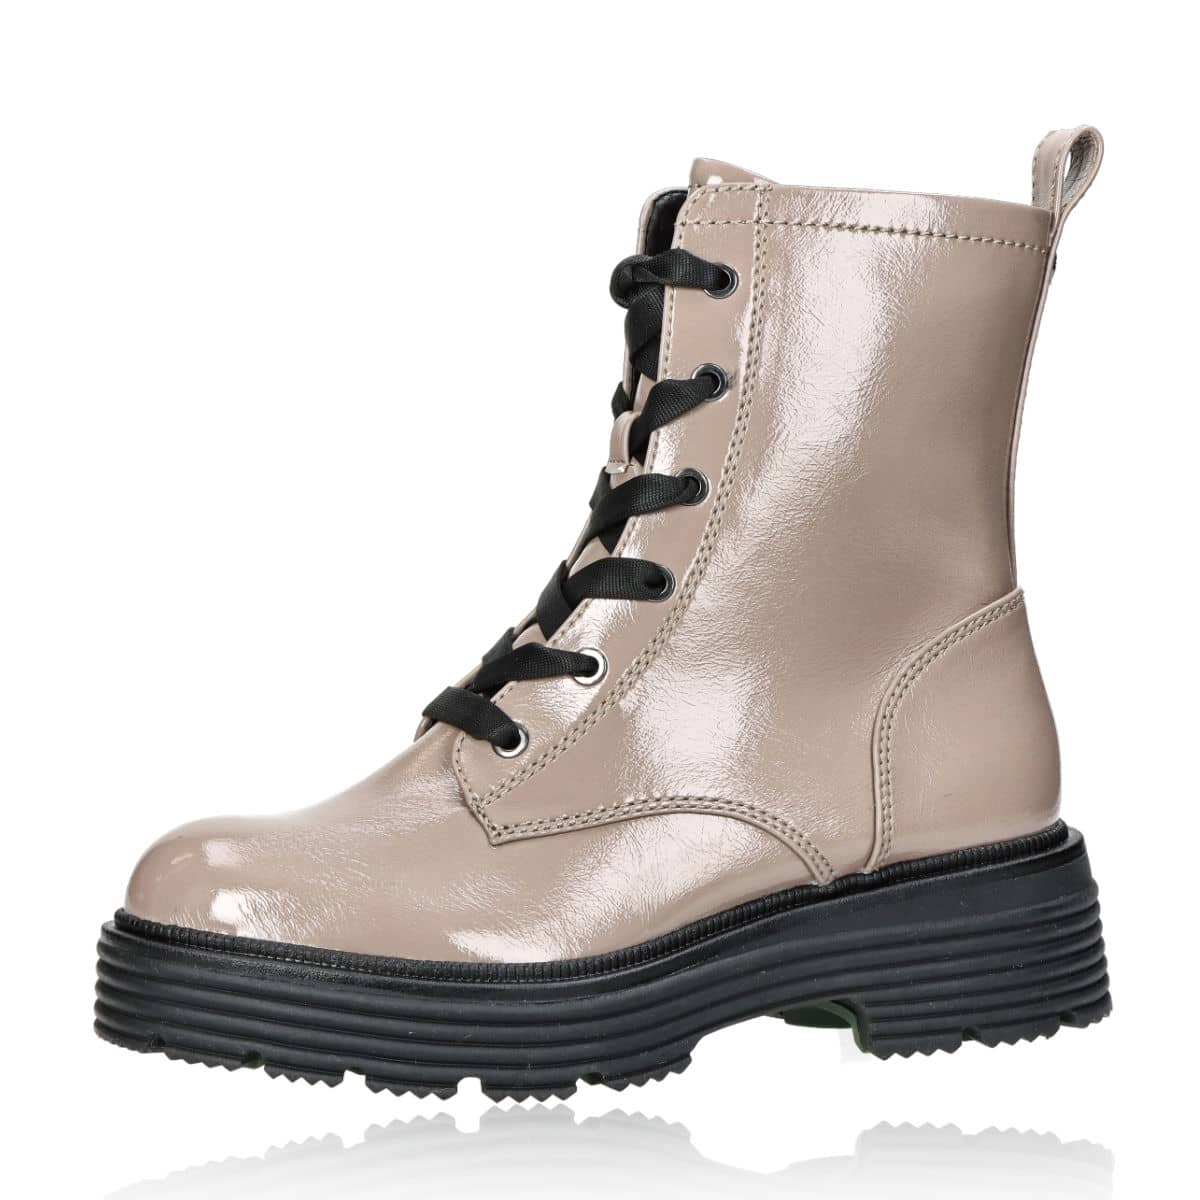 Verward toonhoogte Eeuwigdurend Tamaris women's fashionable zipped ankle boots - beige/brown | Robel.shoes